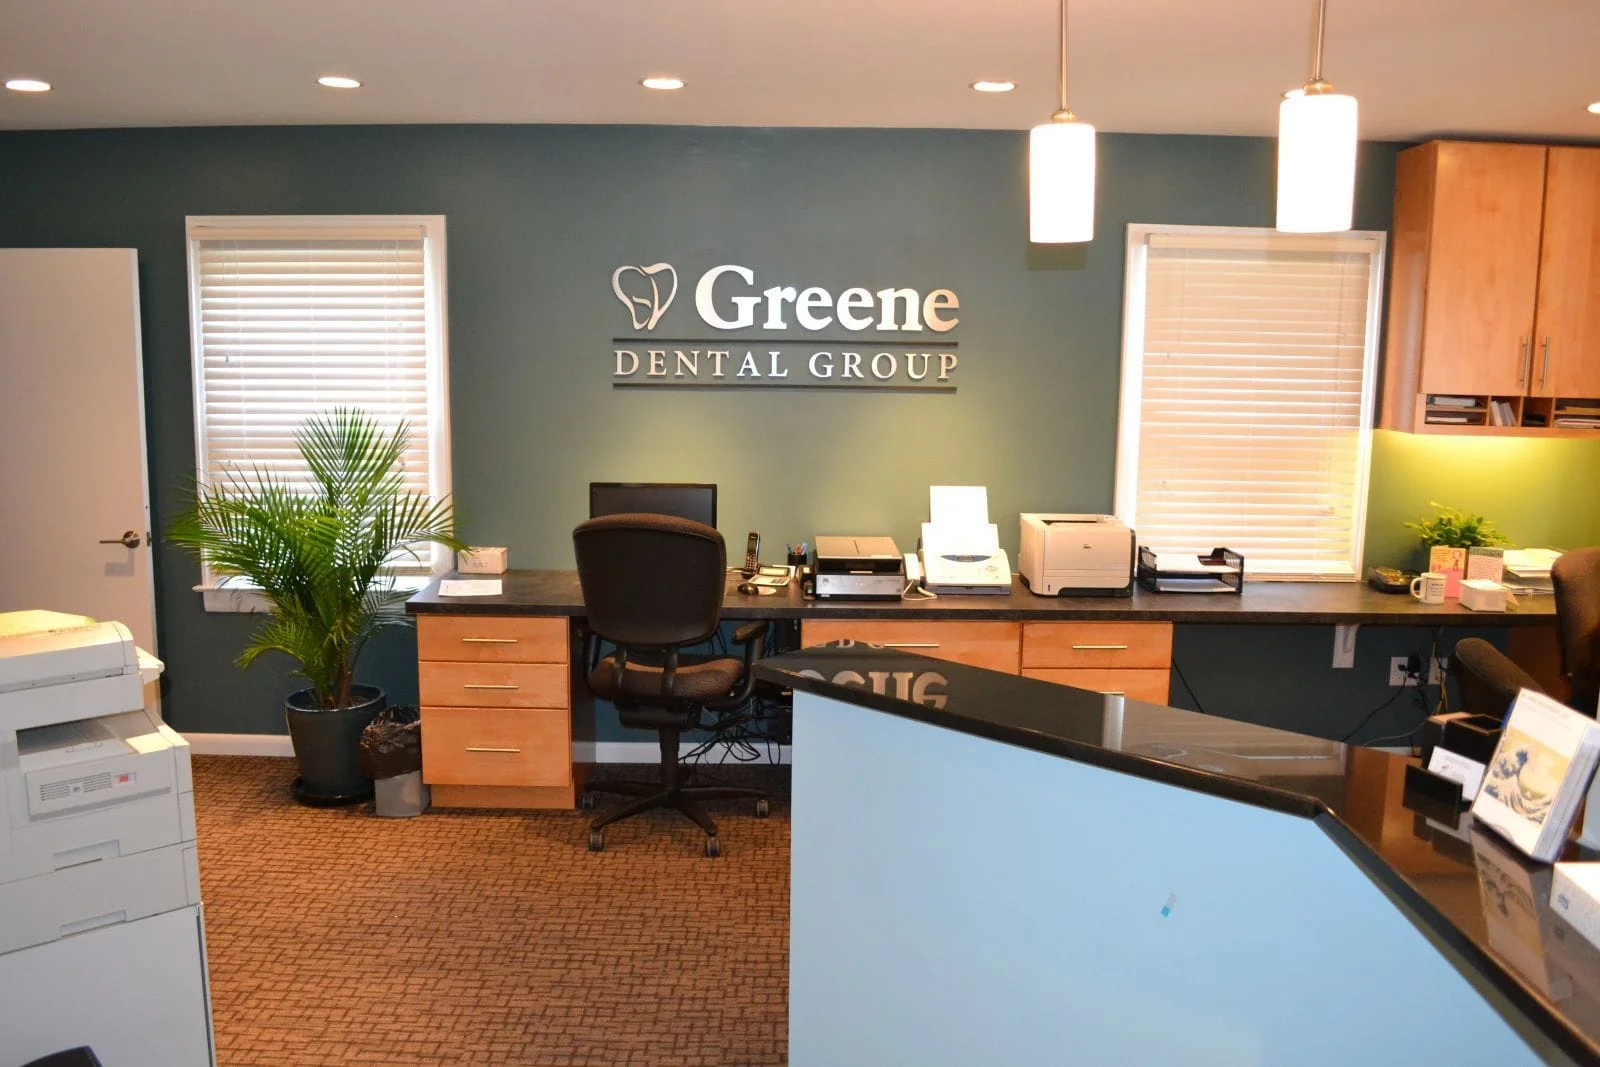 Greene Dental Group Norwich, CT Dental Office Waiting Room